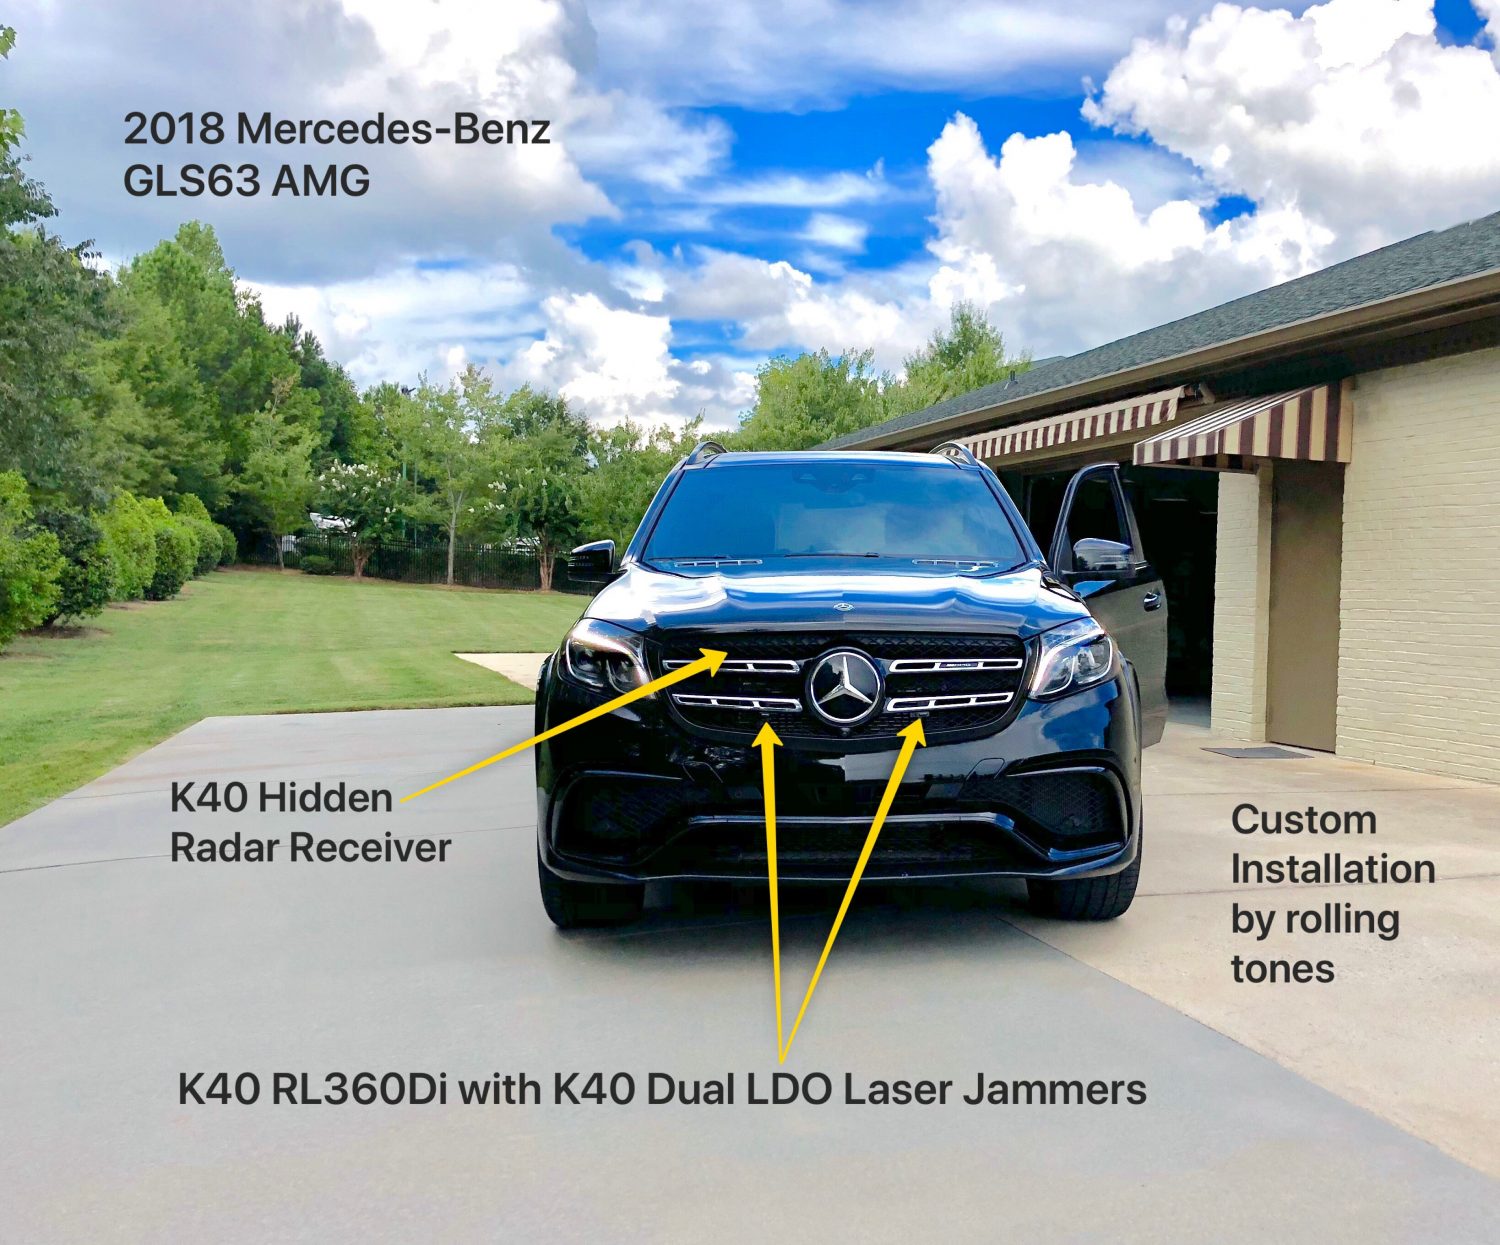 K40 radar detector and laser jammers on a Mercedes Benz